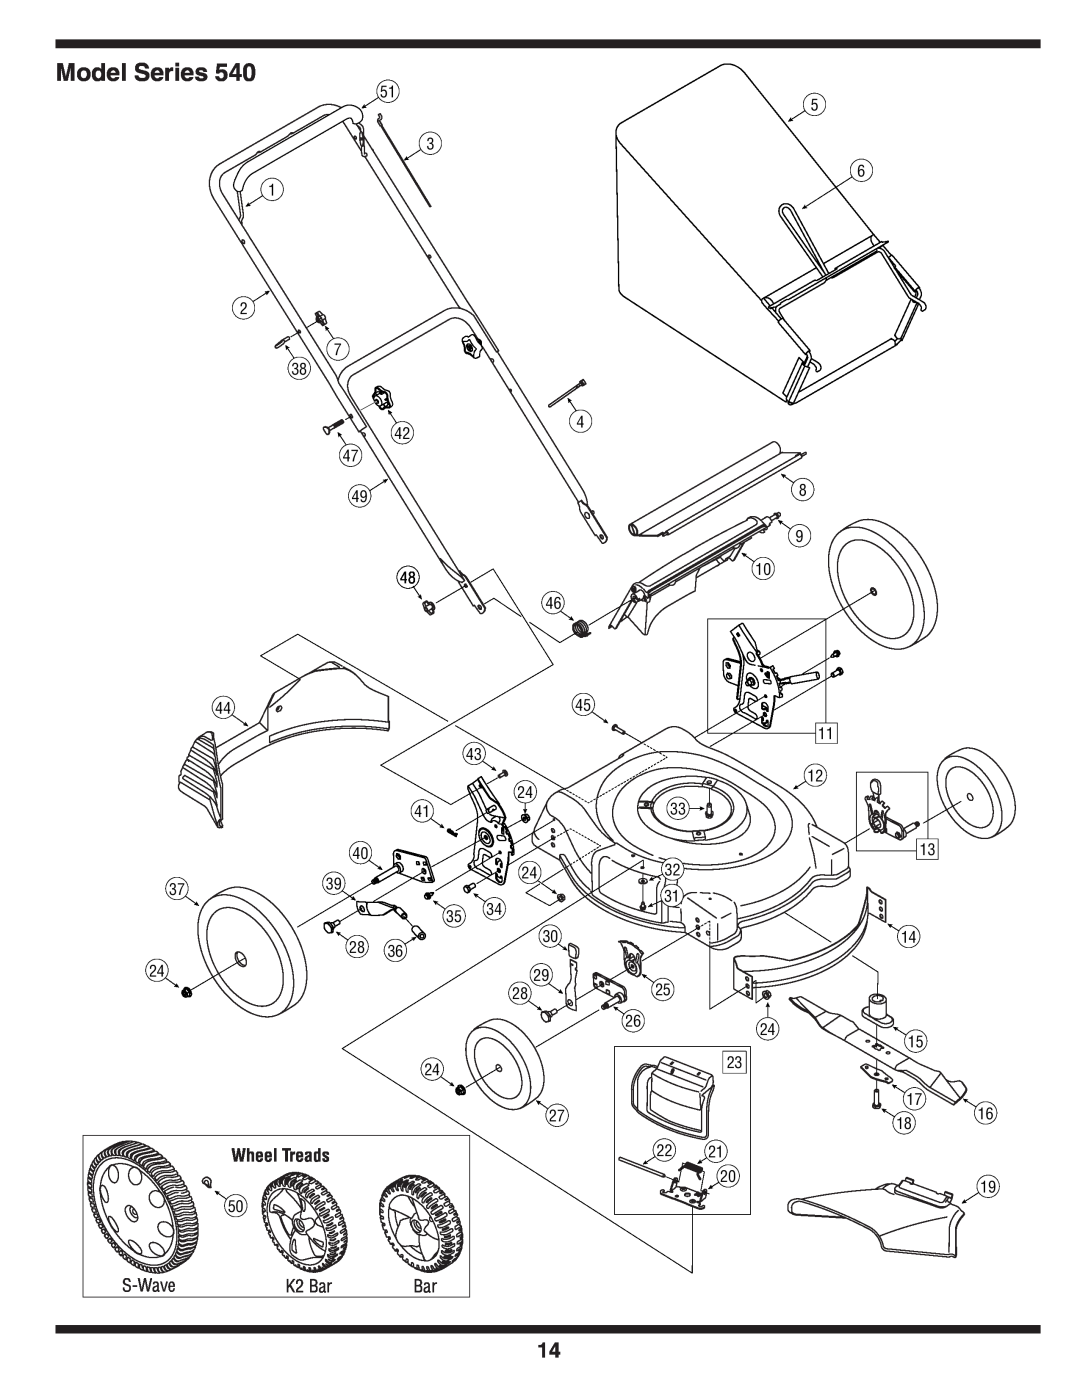 Troy-Bilt Series 540 manual Model Series, Wheel Treads 